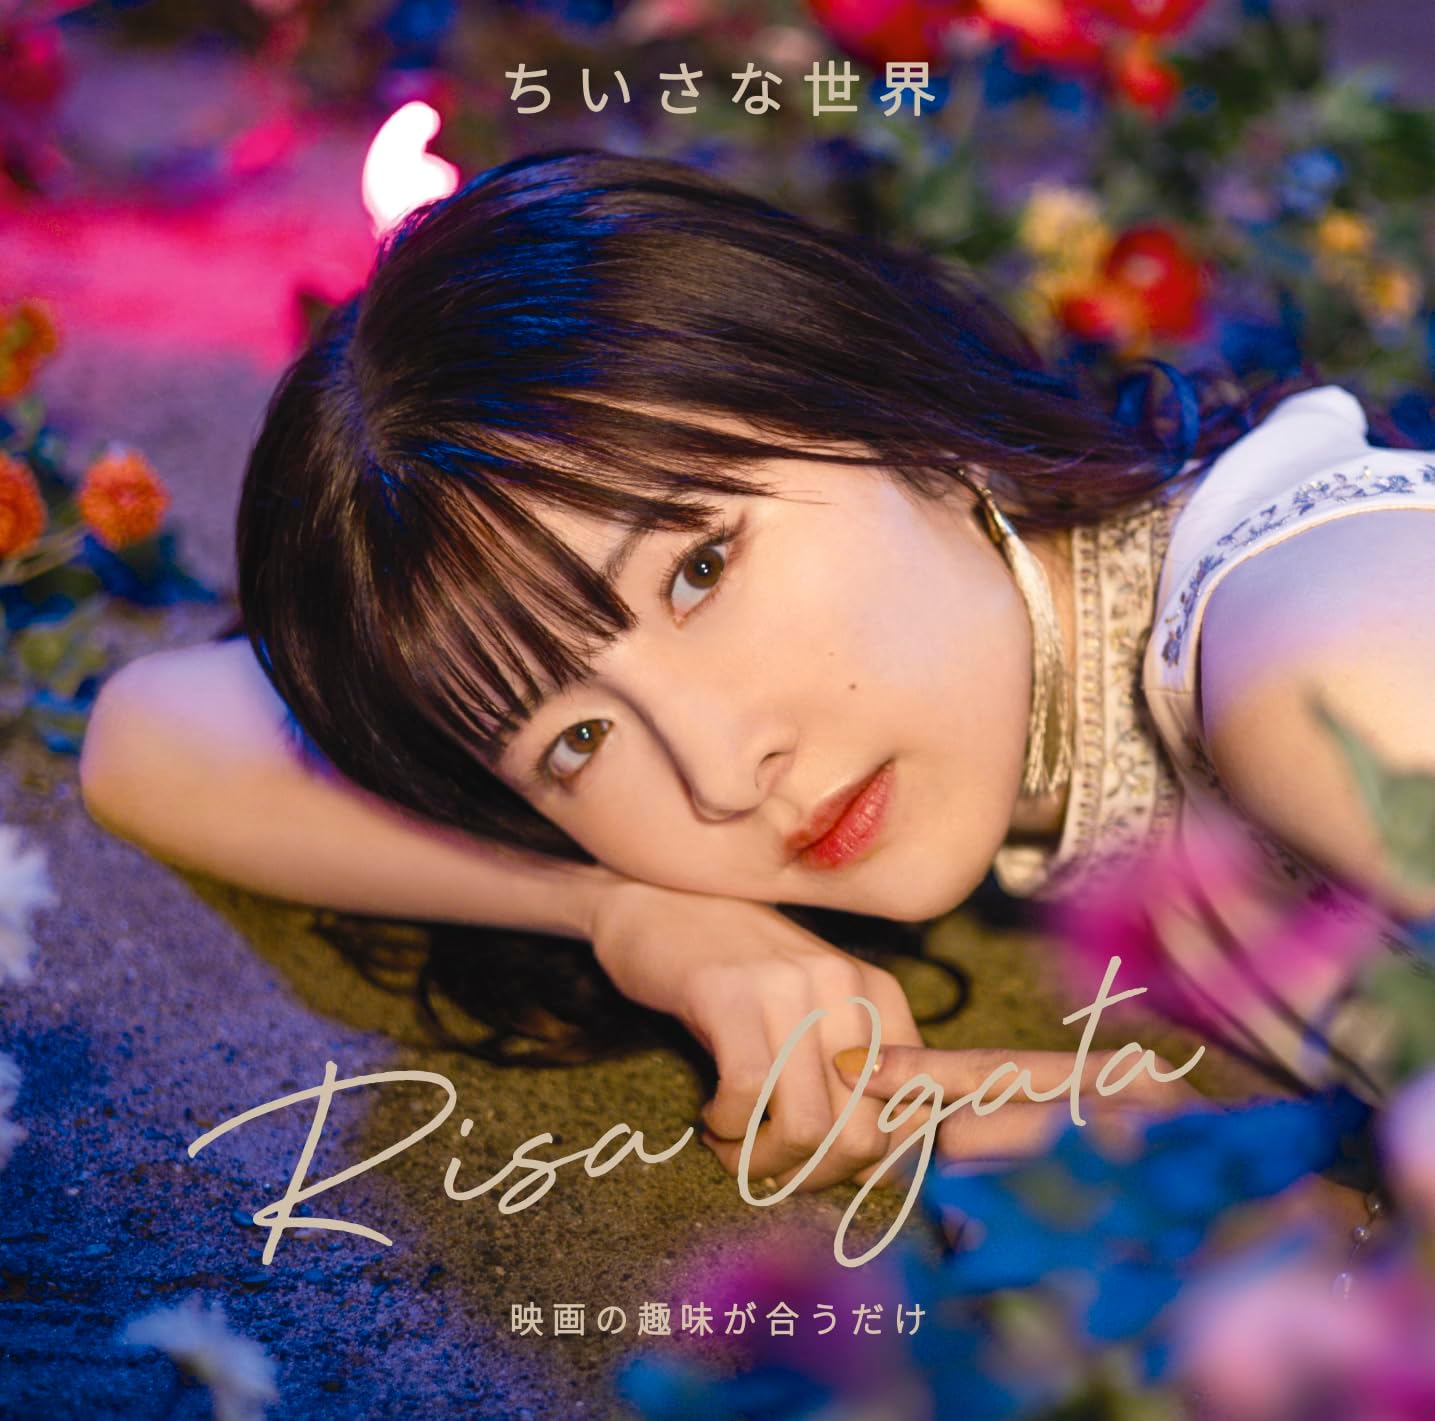 Risa Ogata — Chiisana Sekai cover artwork